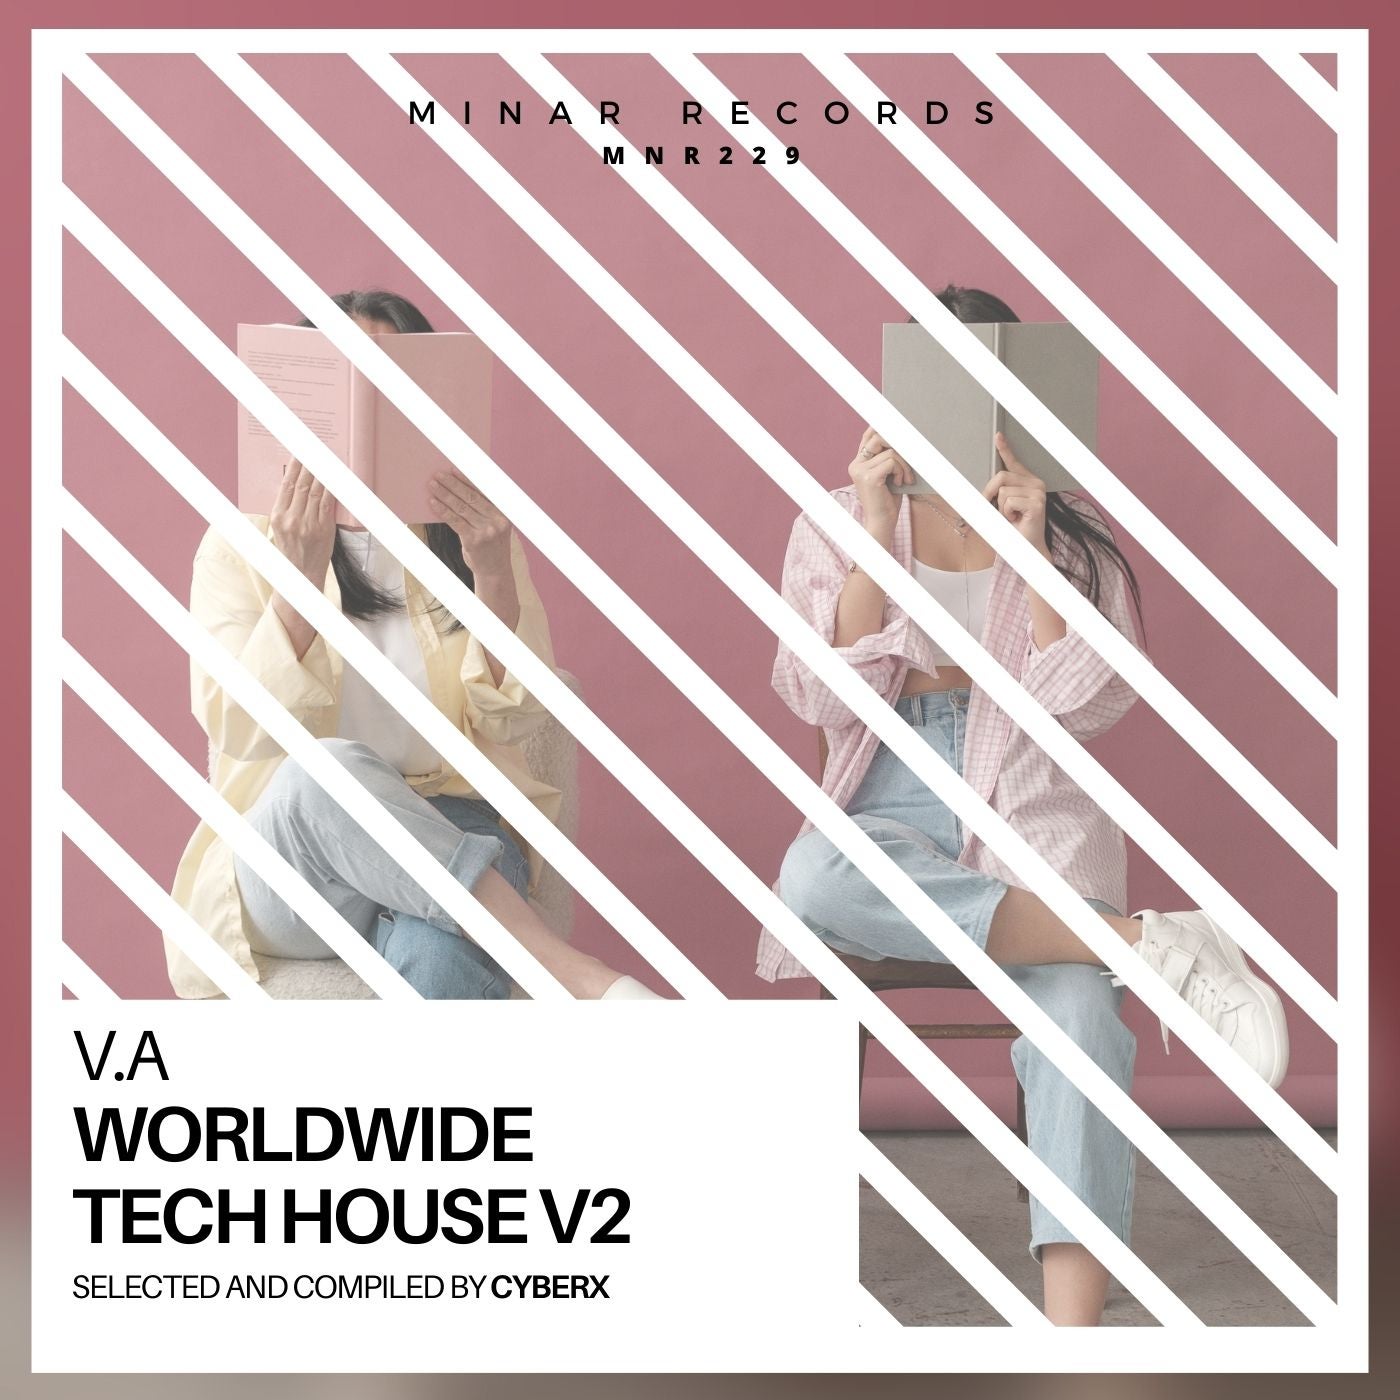 Worldwide Tech House V2